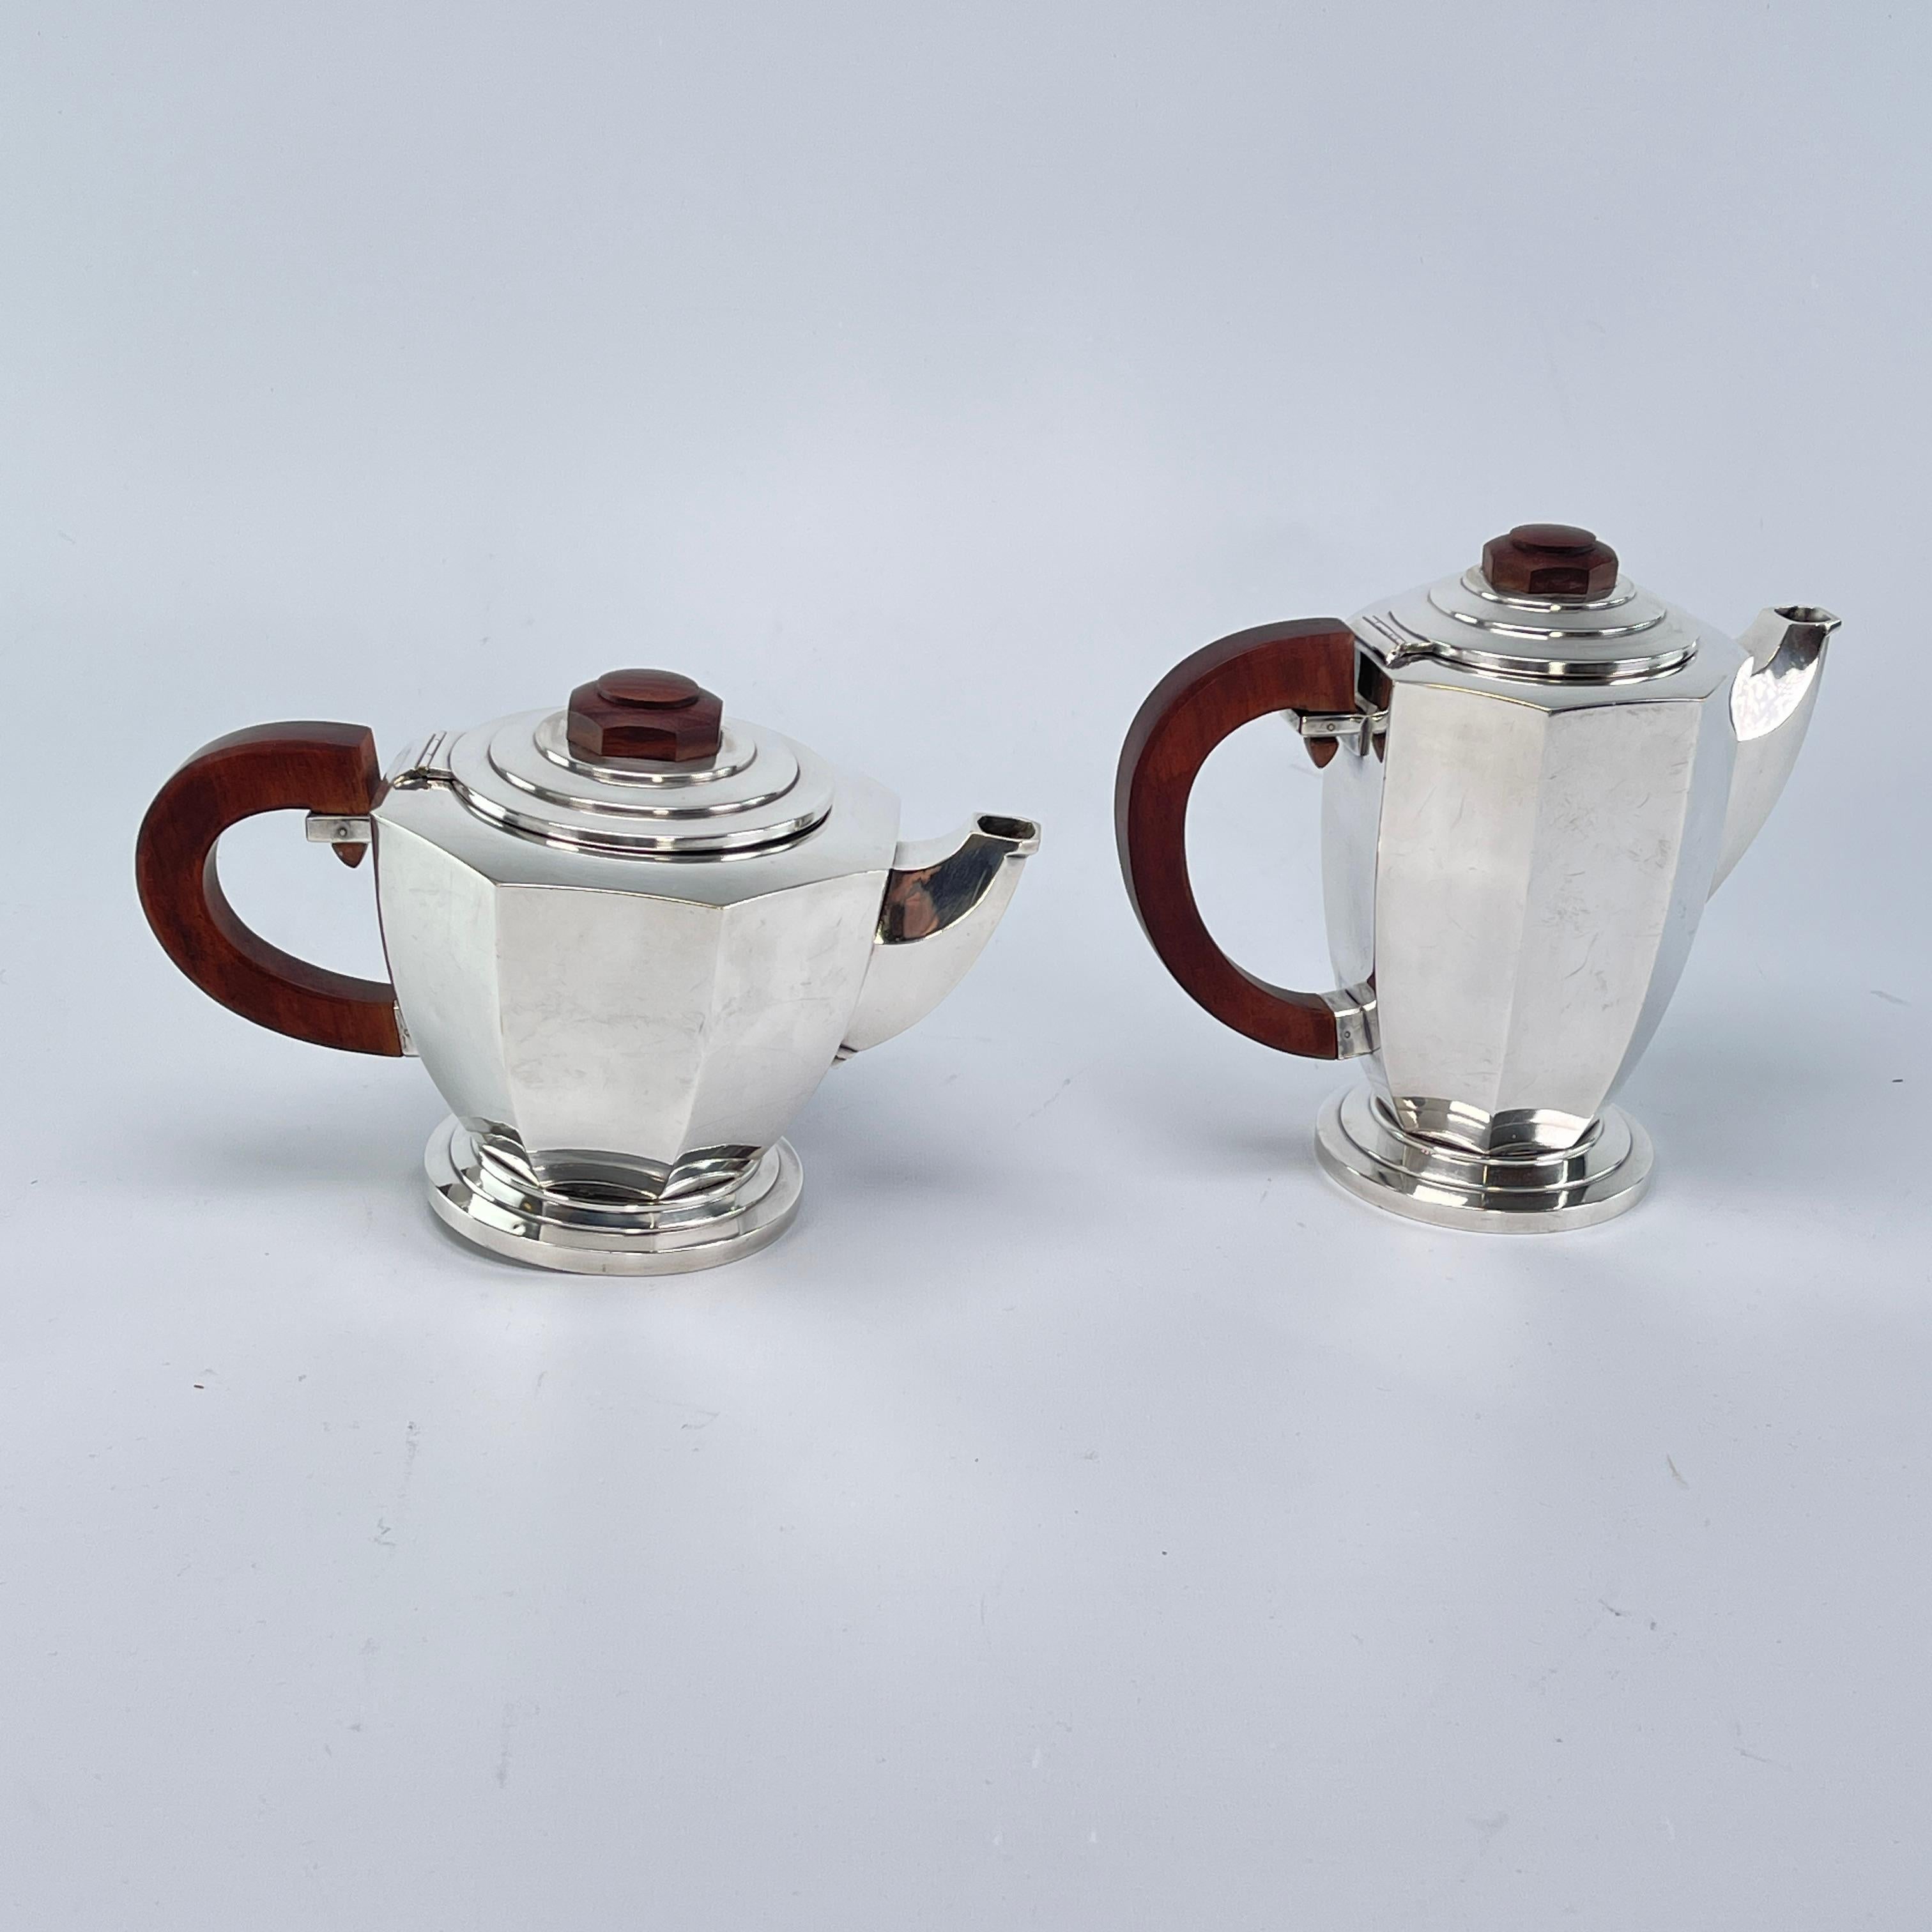 Silvered beautiful four-piece set ART DECO coffee service silver-plated tea service, 1920